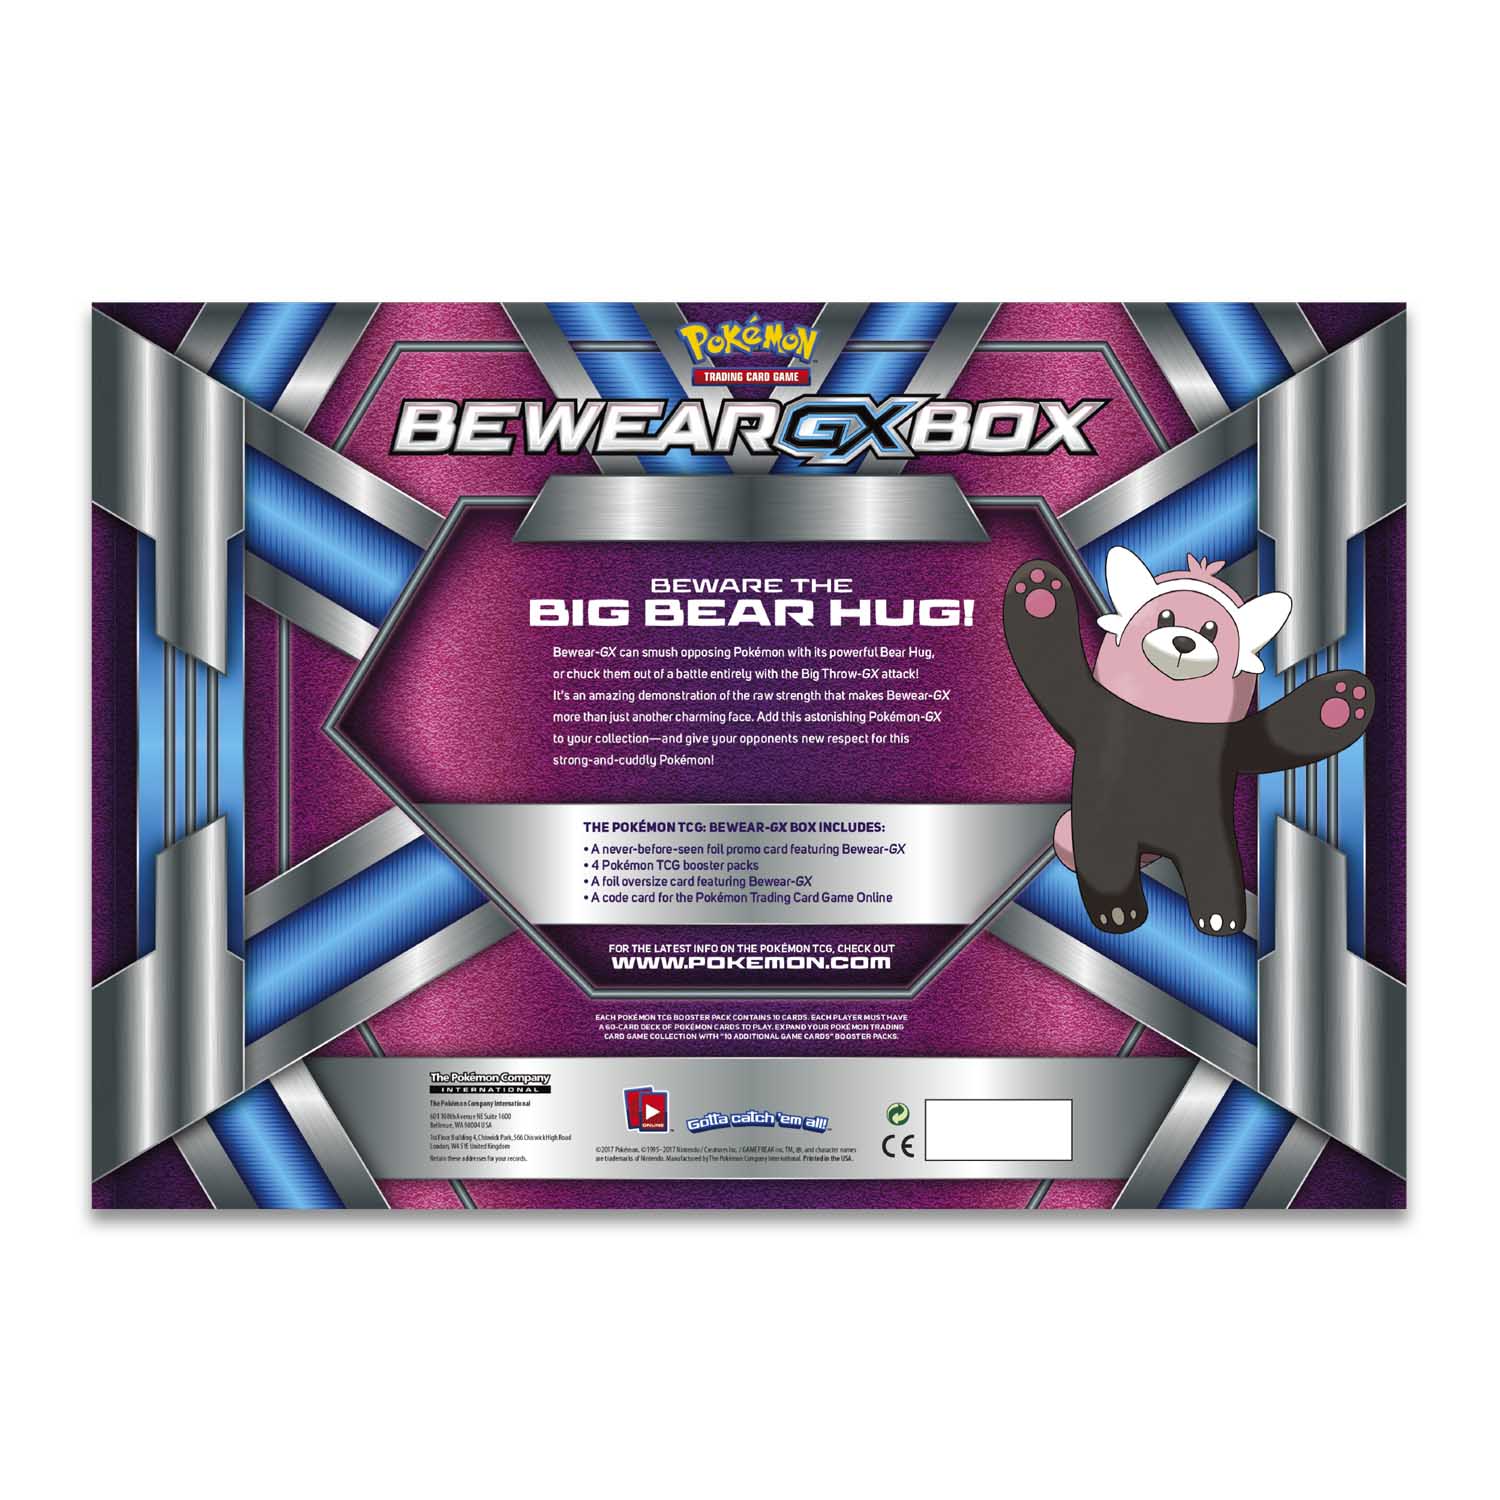 Pokemon TCG Bewear-GX Box  Includes Foil Promo Card "NEW" 